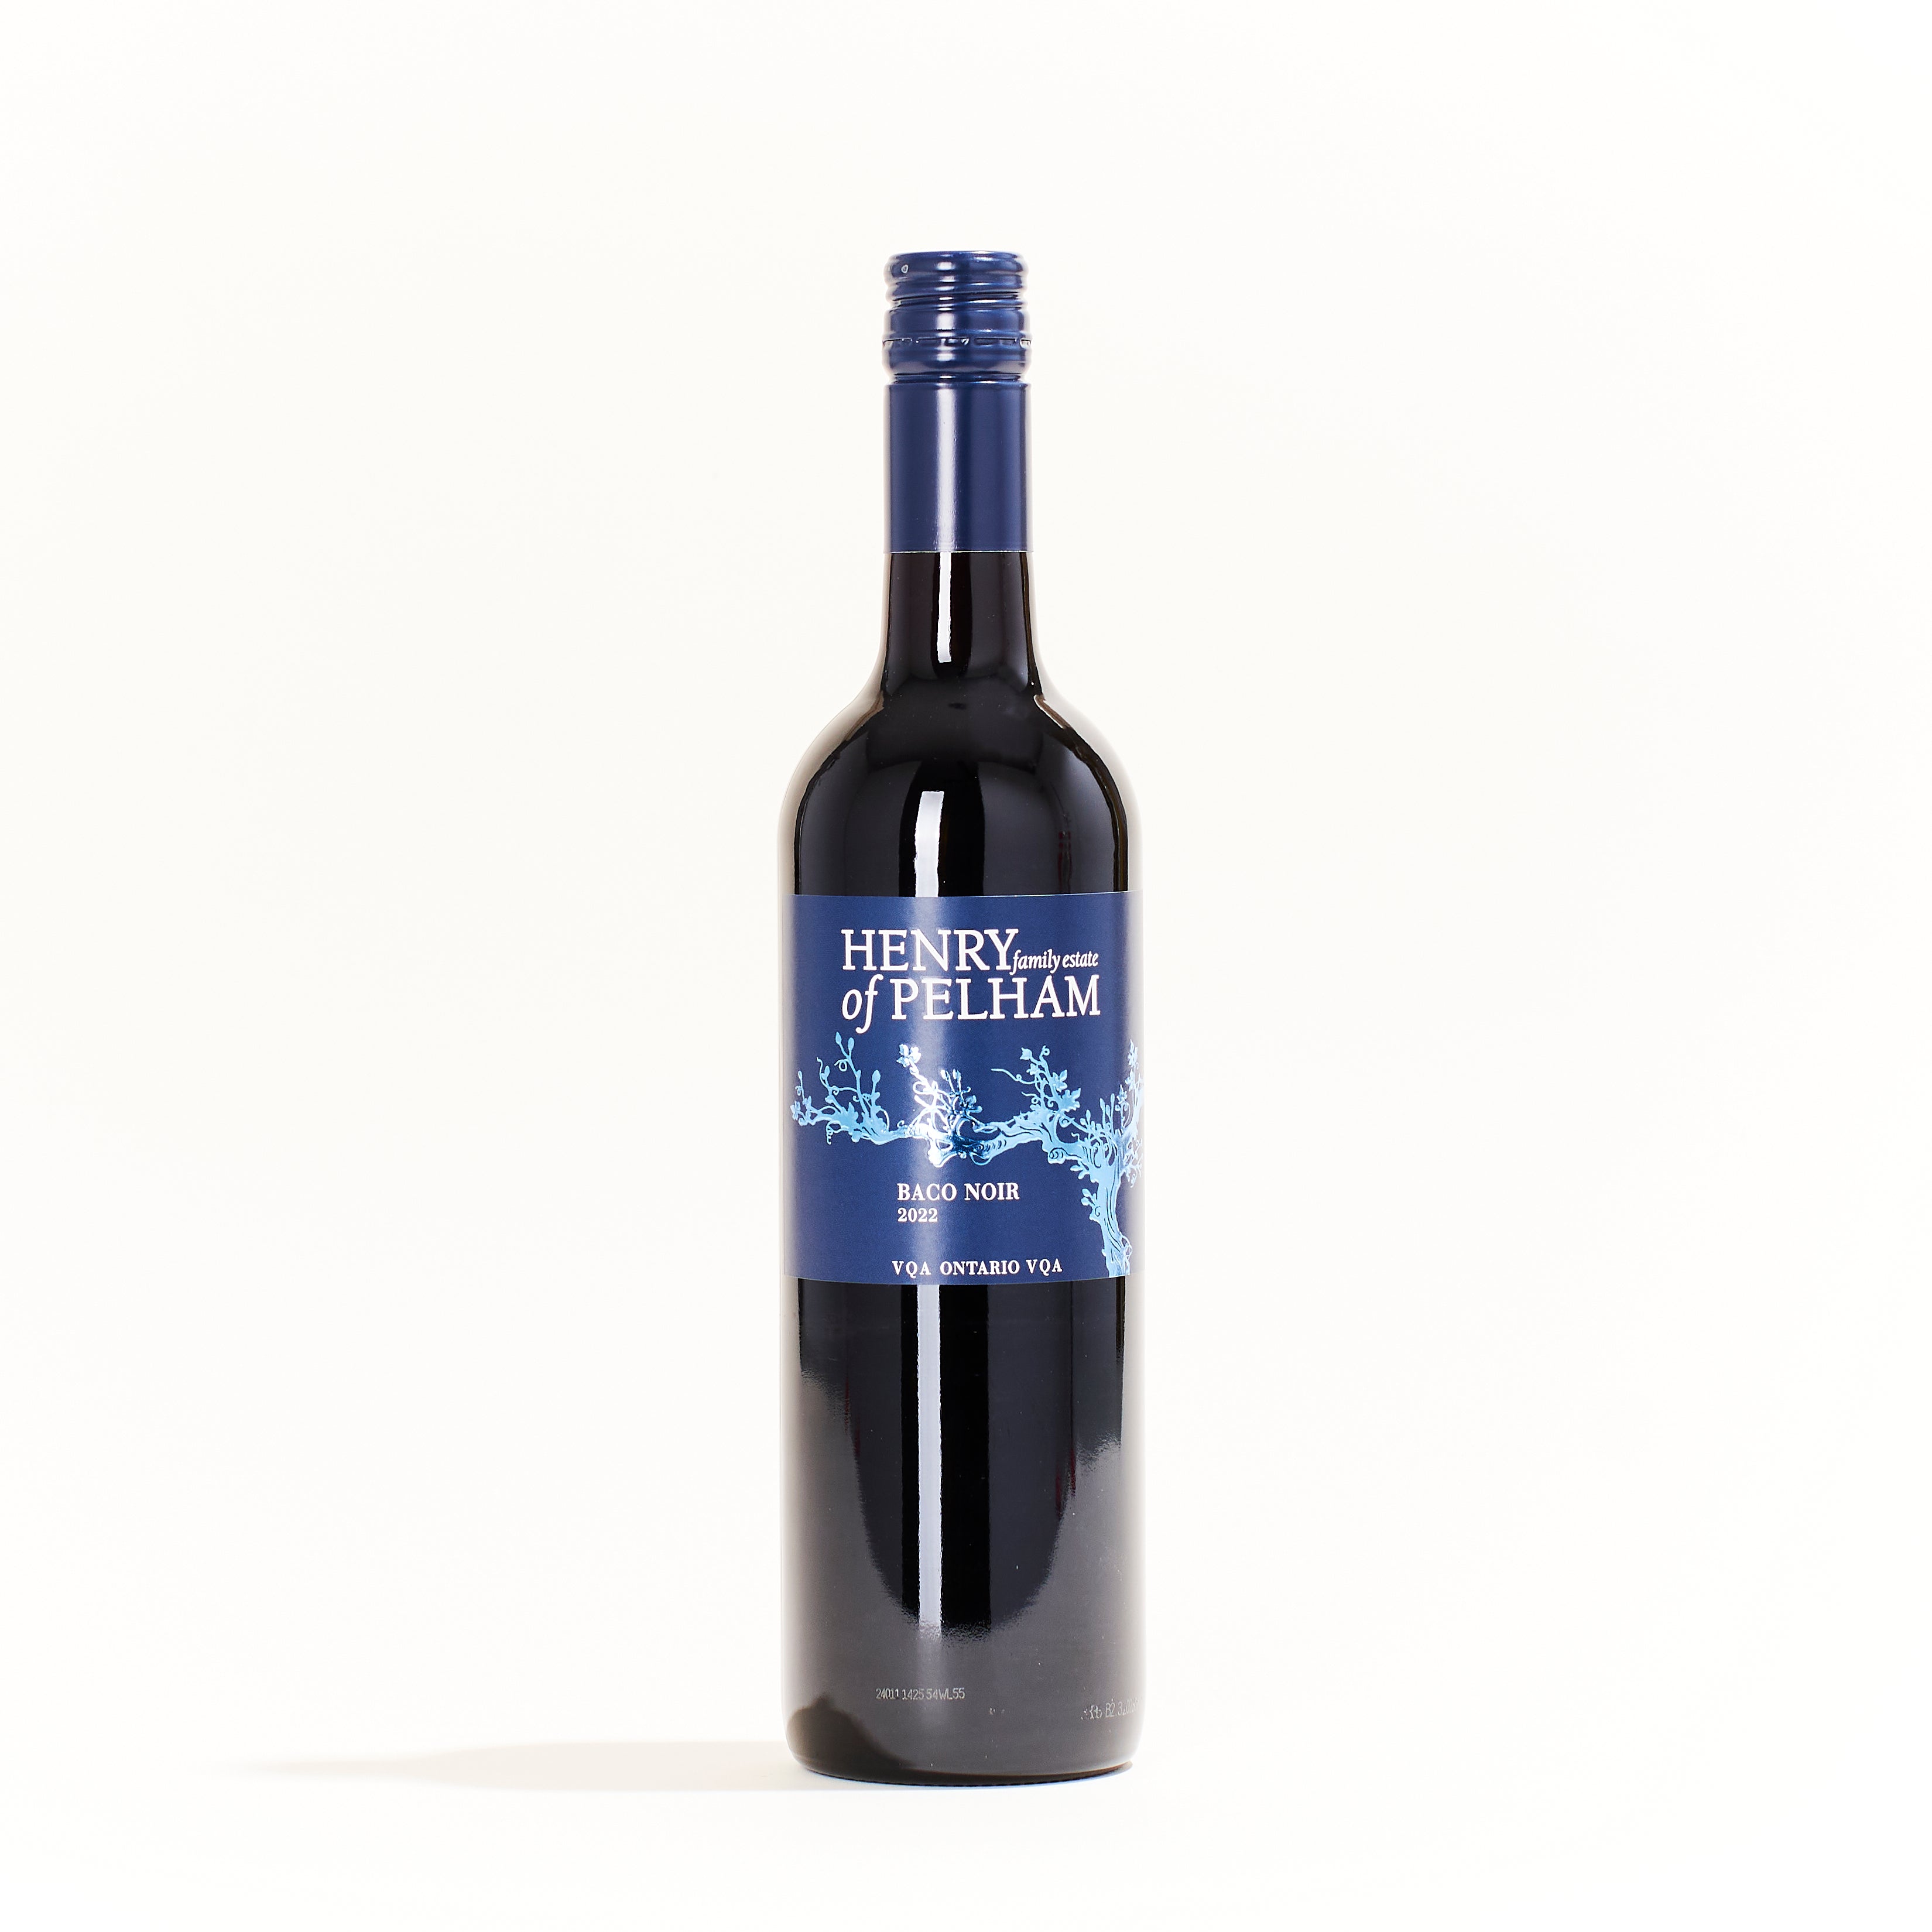 Henry of Pelham Niagara Peninsula Baco Noirnatural Red wine from Ontario, Canada